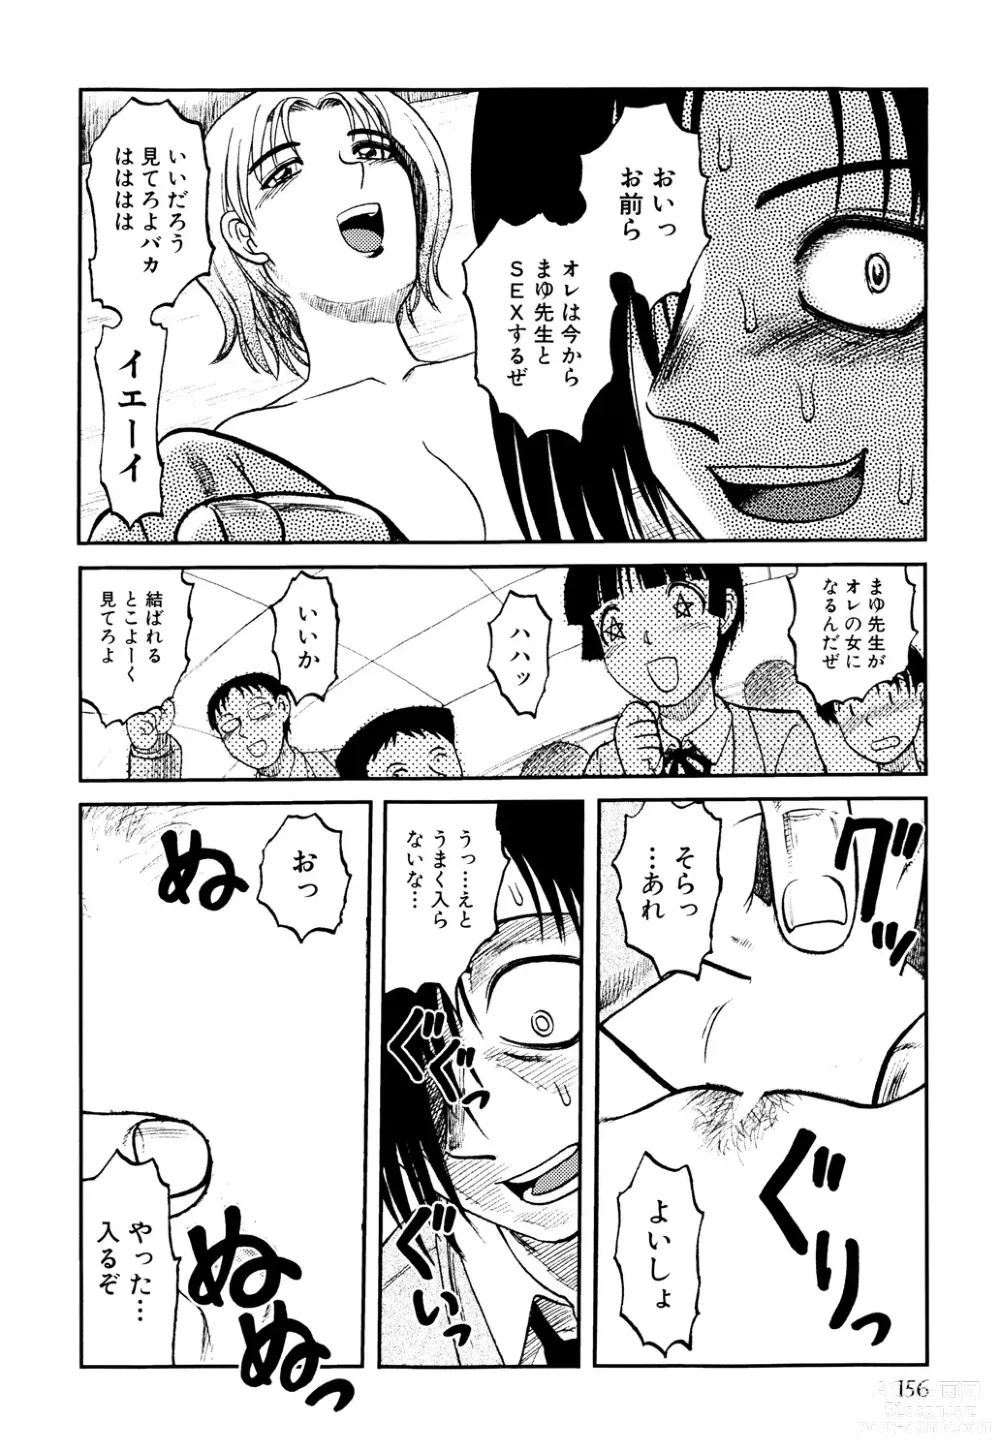 Page 158 of manga Ingyaku Kangoku Tou